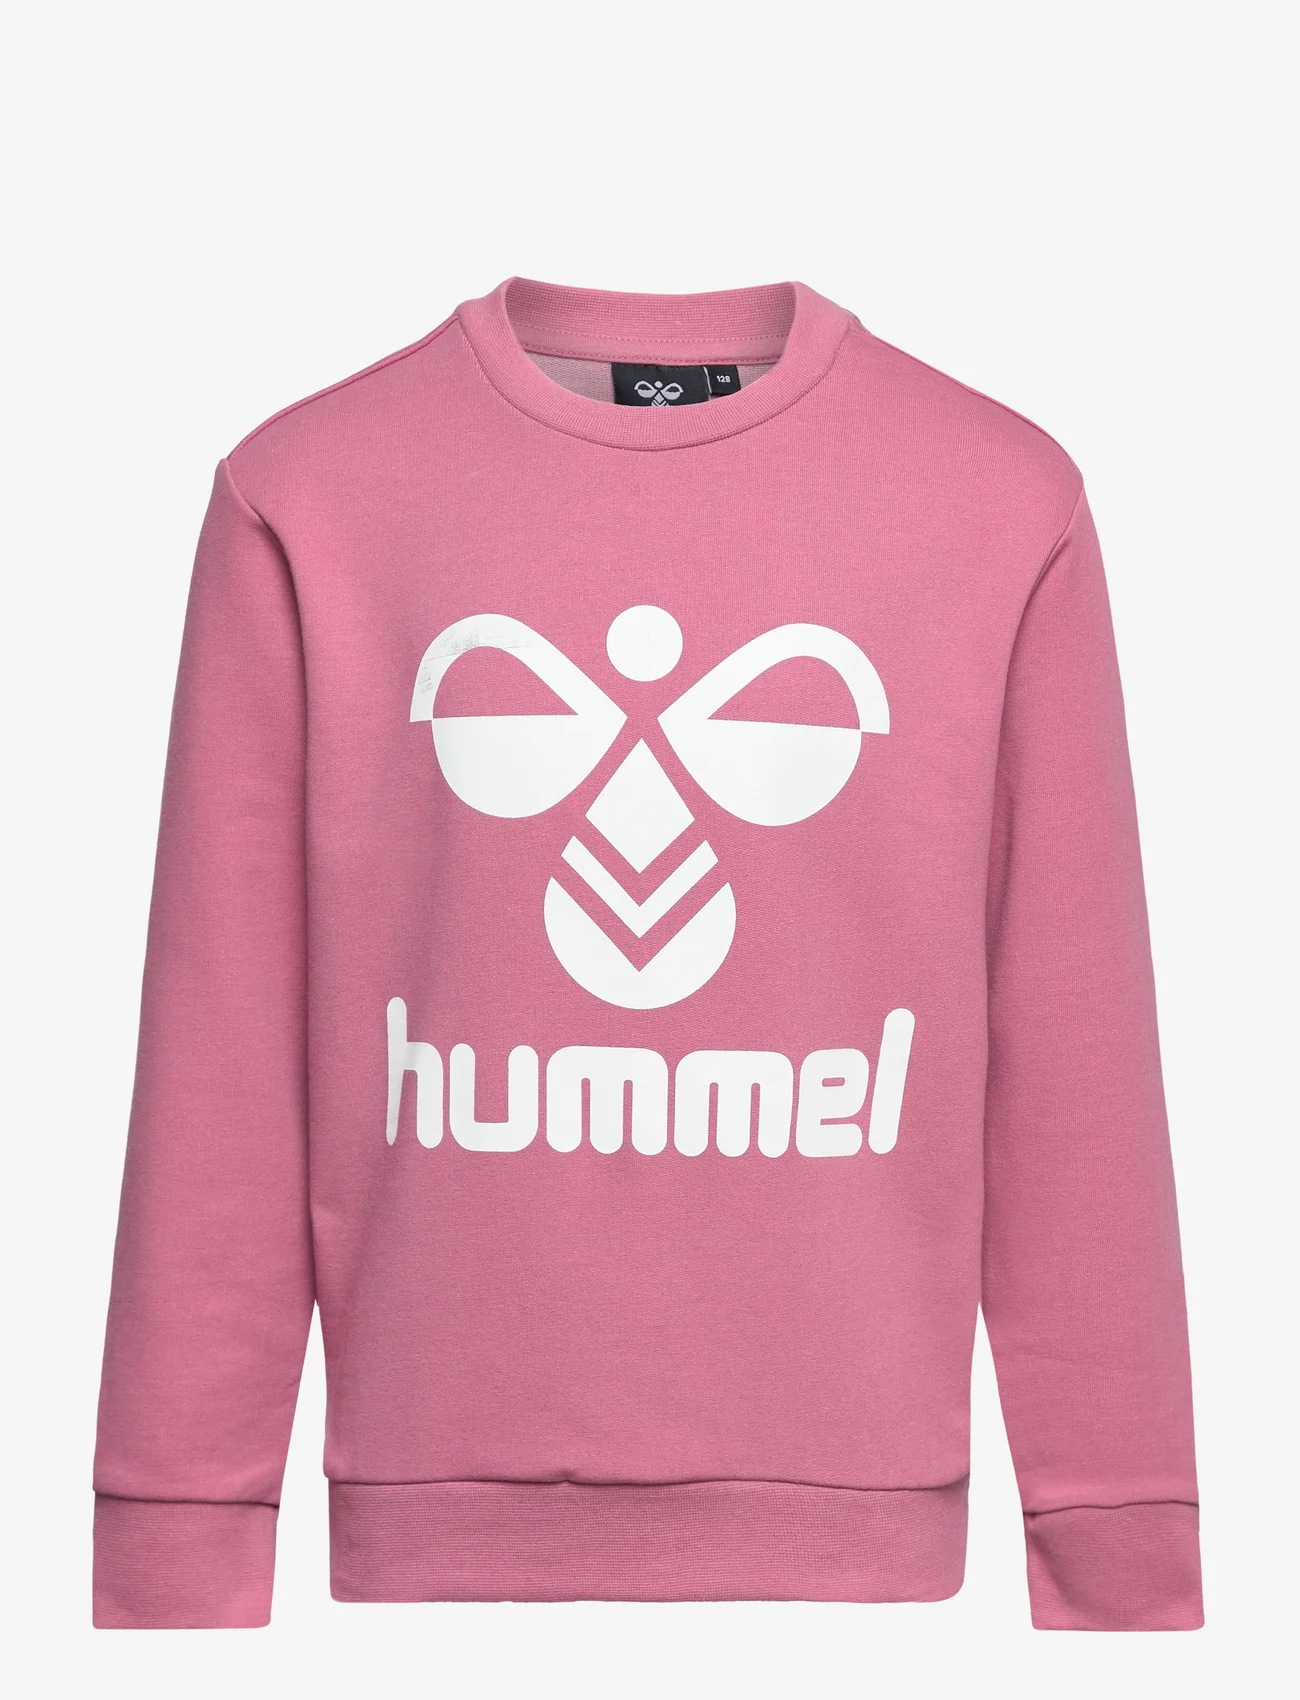 Hummel - hmlDOS SWEATSHIRT - sweatshirts & huvtröjor - heather rose - 0